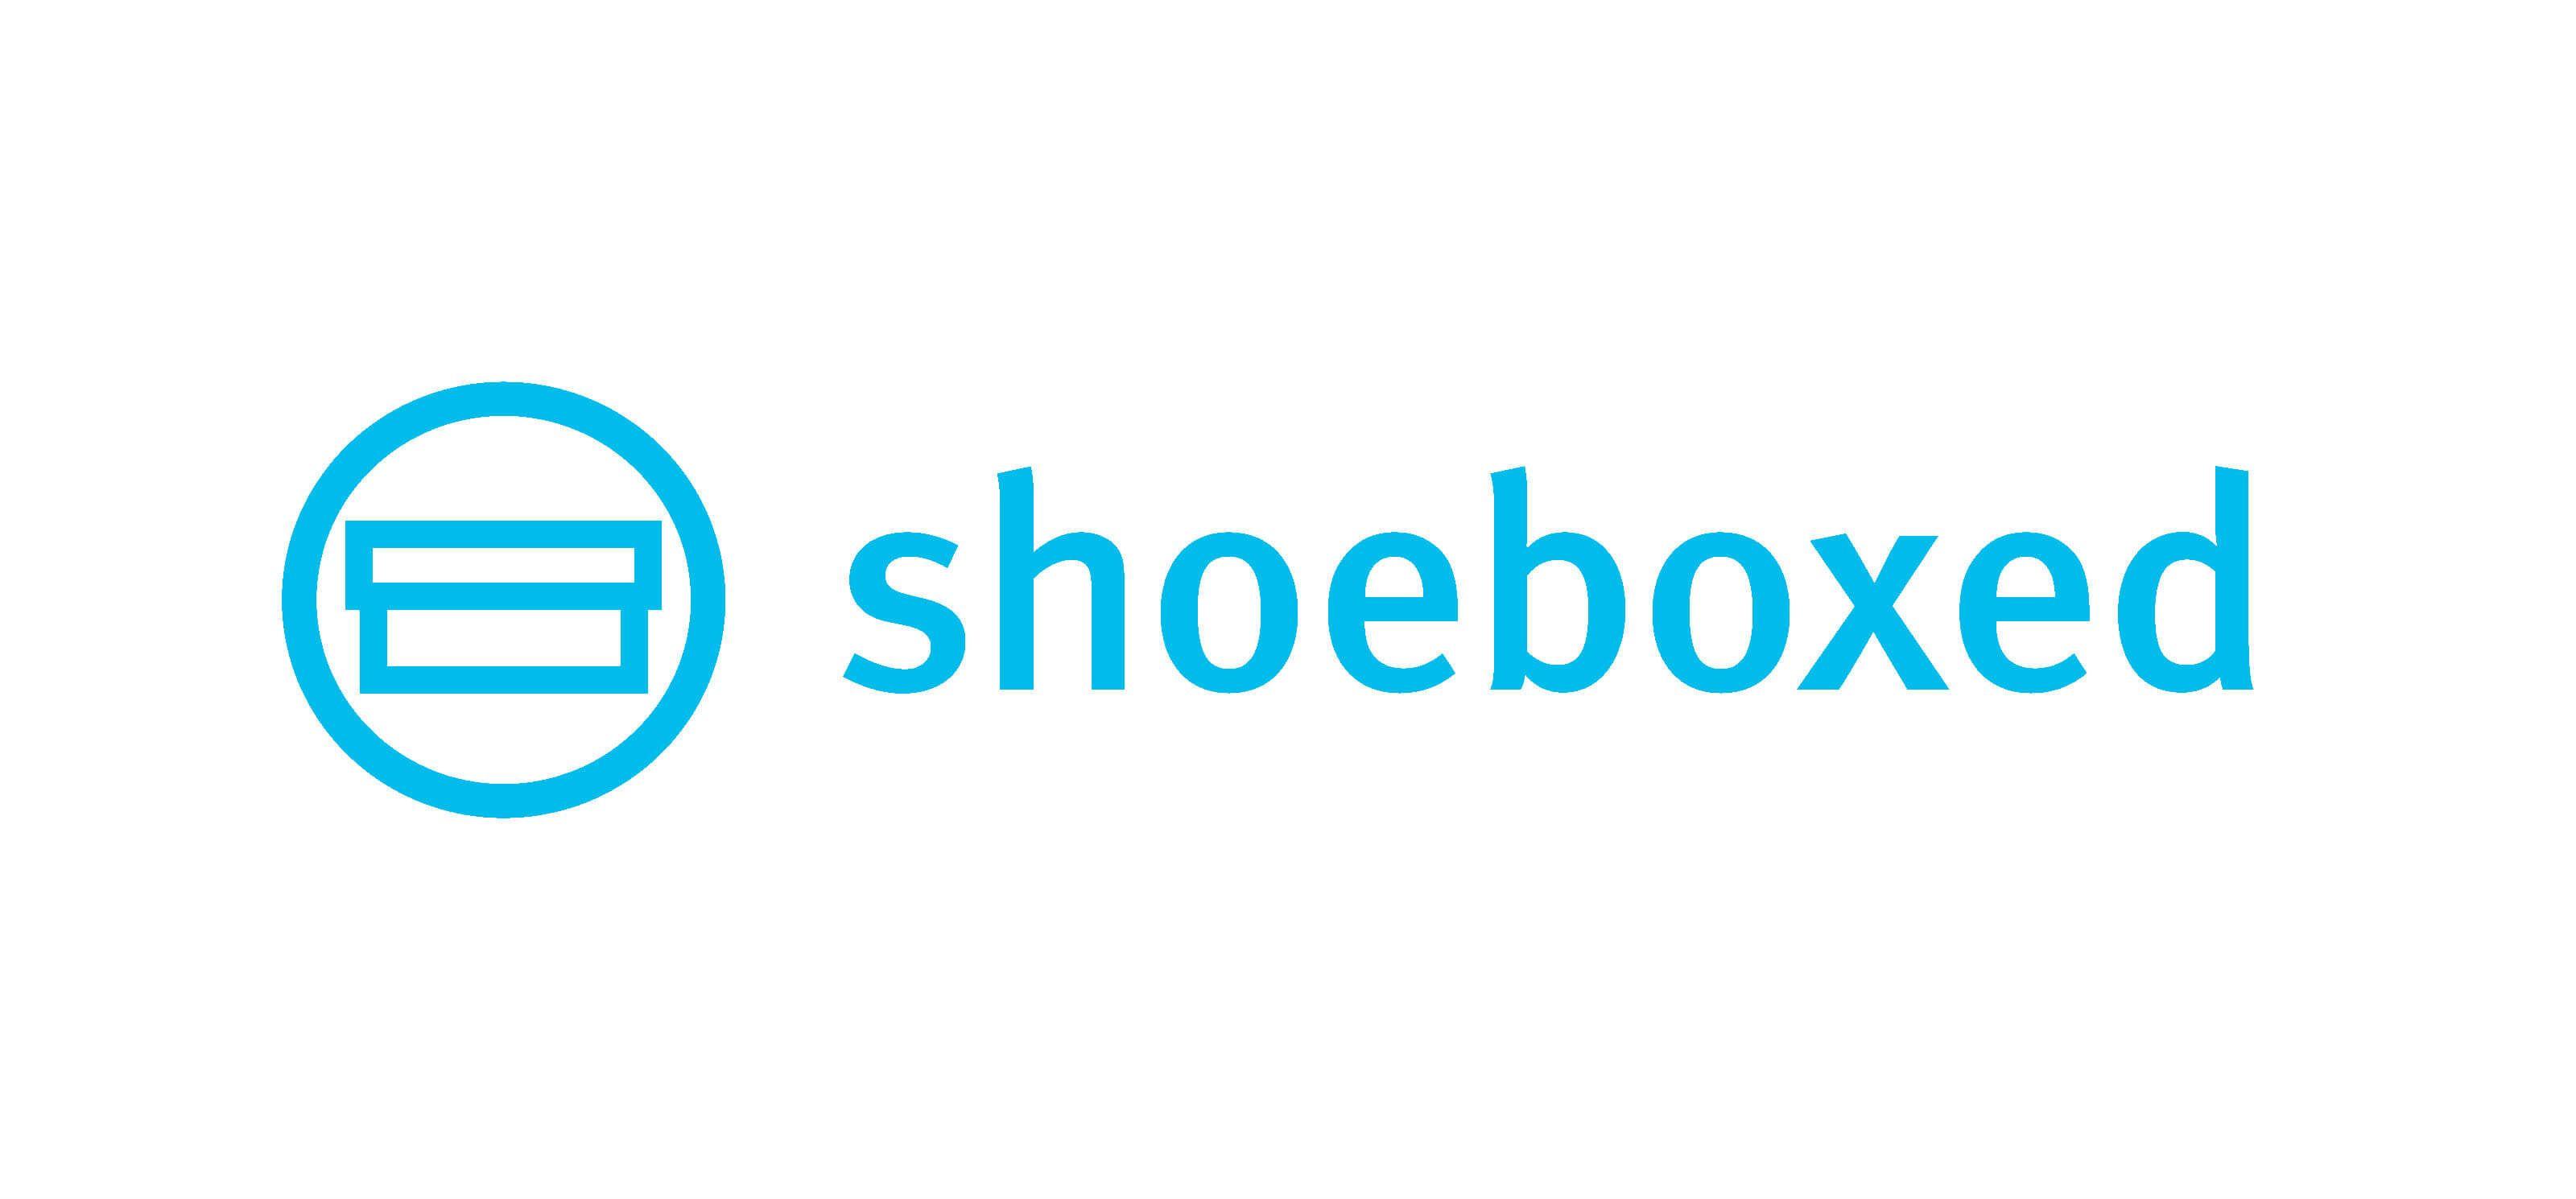 Eliminate Logo - Shoeboxed Transaprent Logo with White Box.com